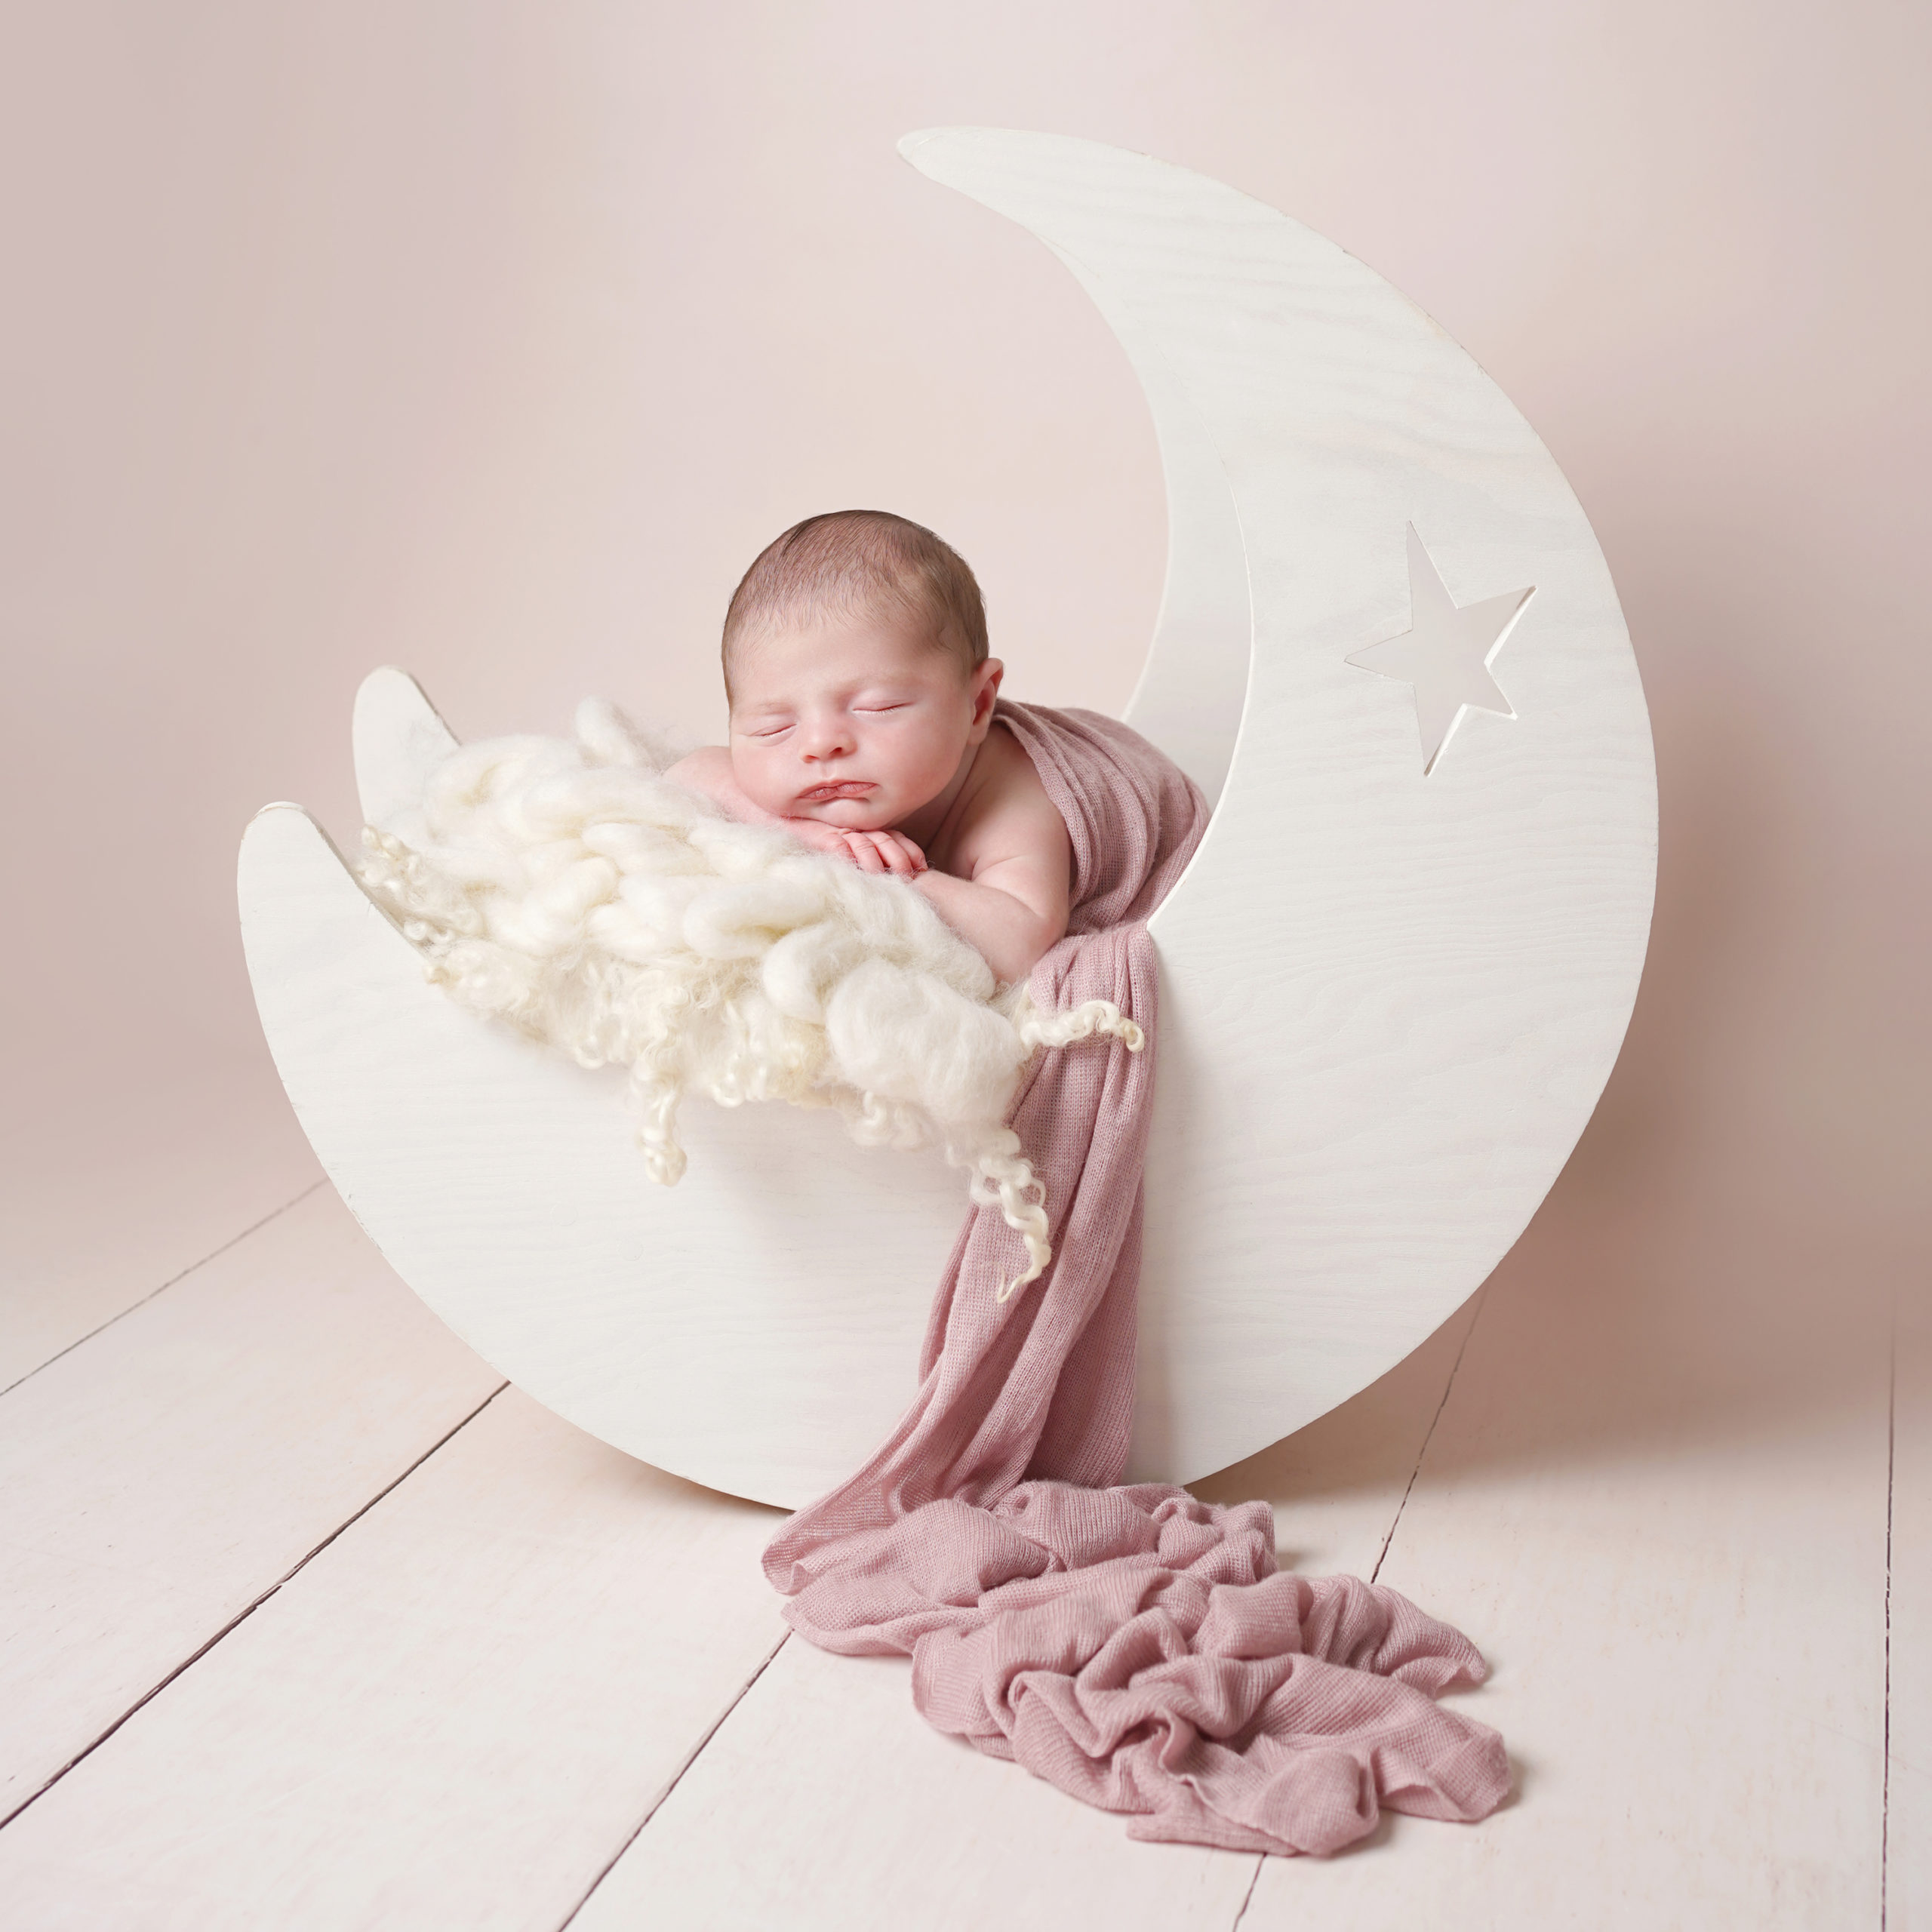 Newborn photography peekaboo by Xposure Liverpool